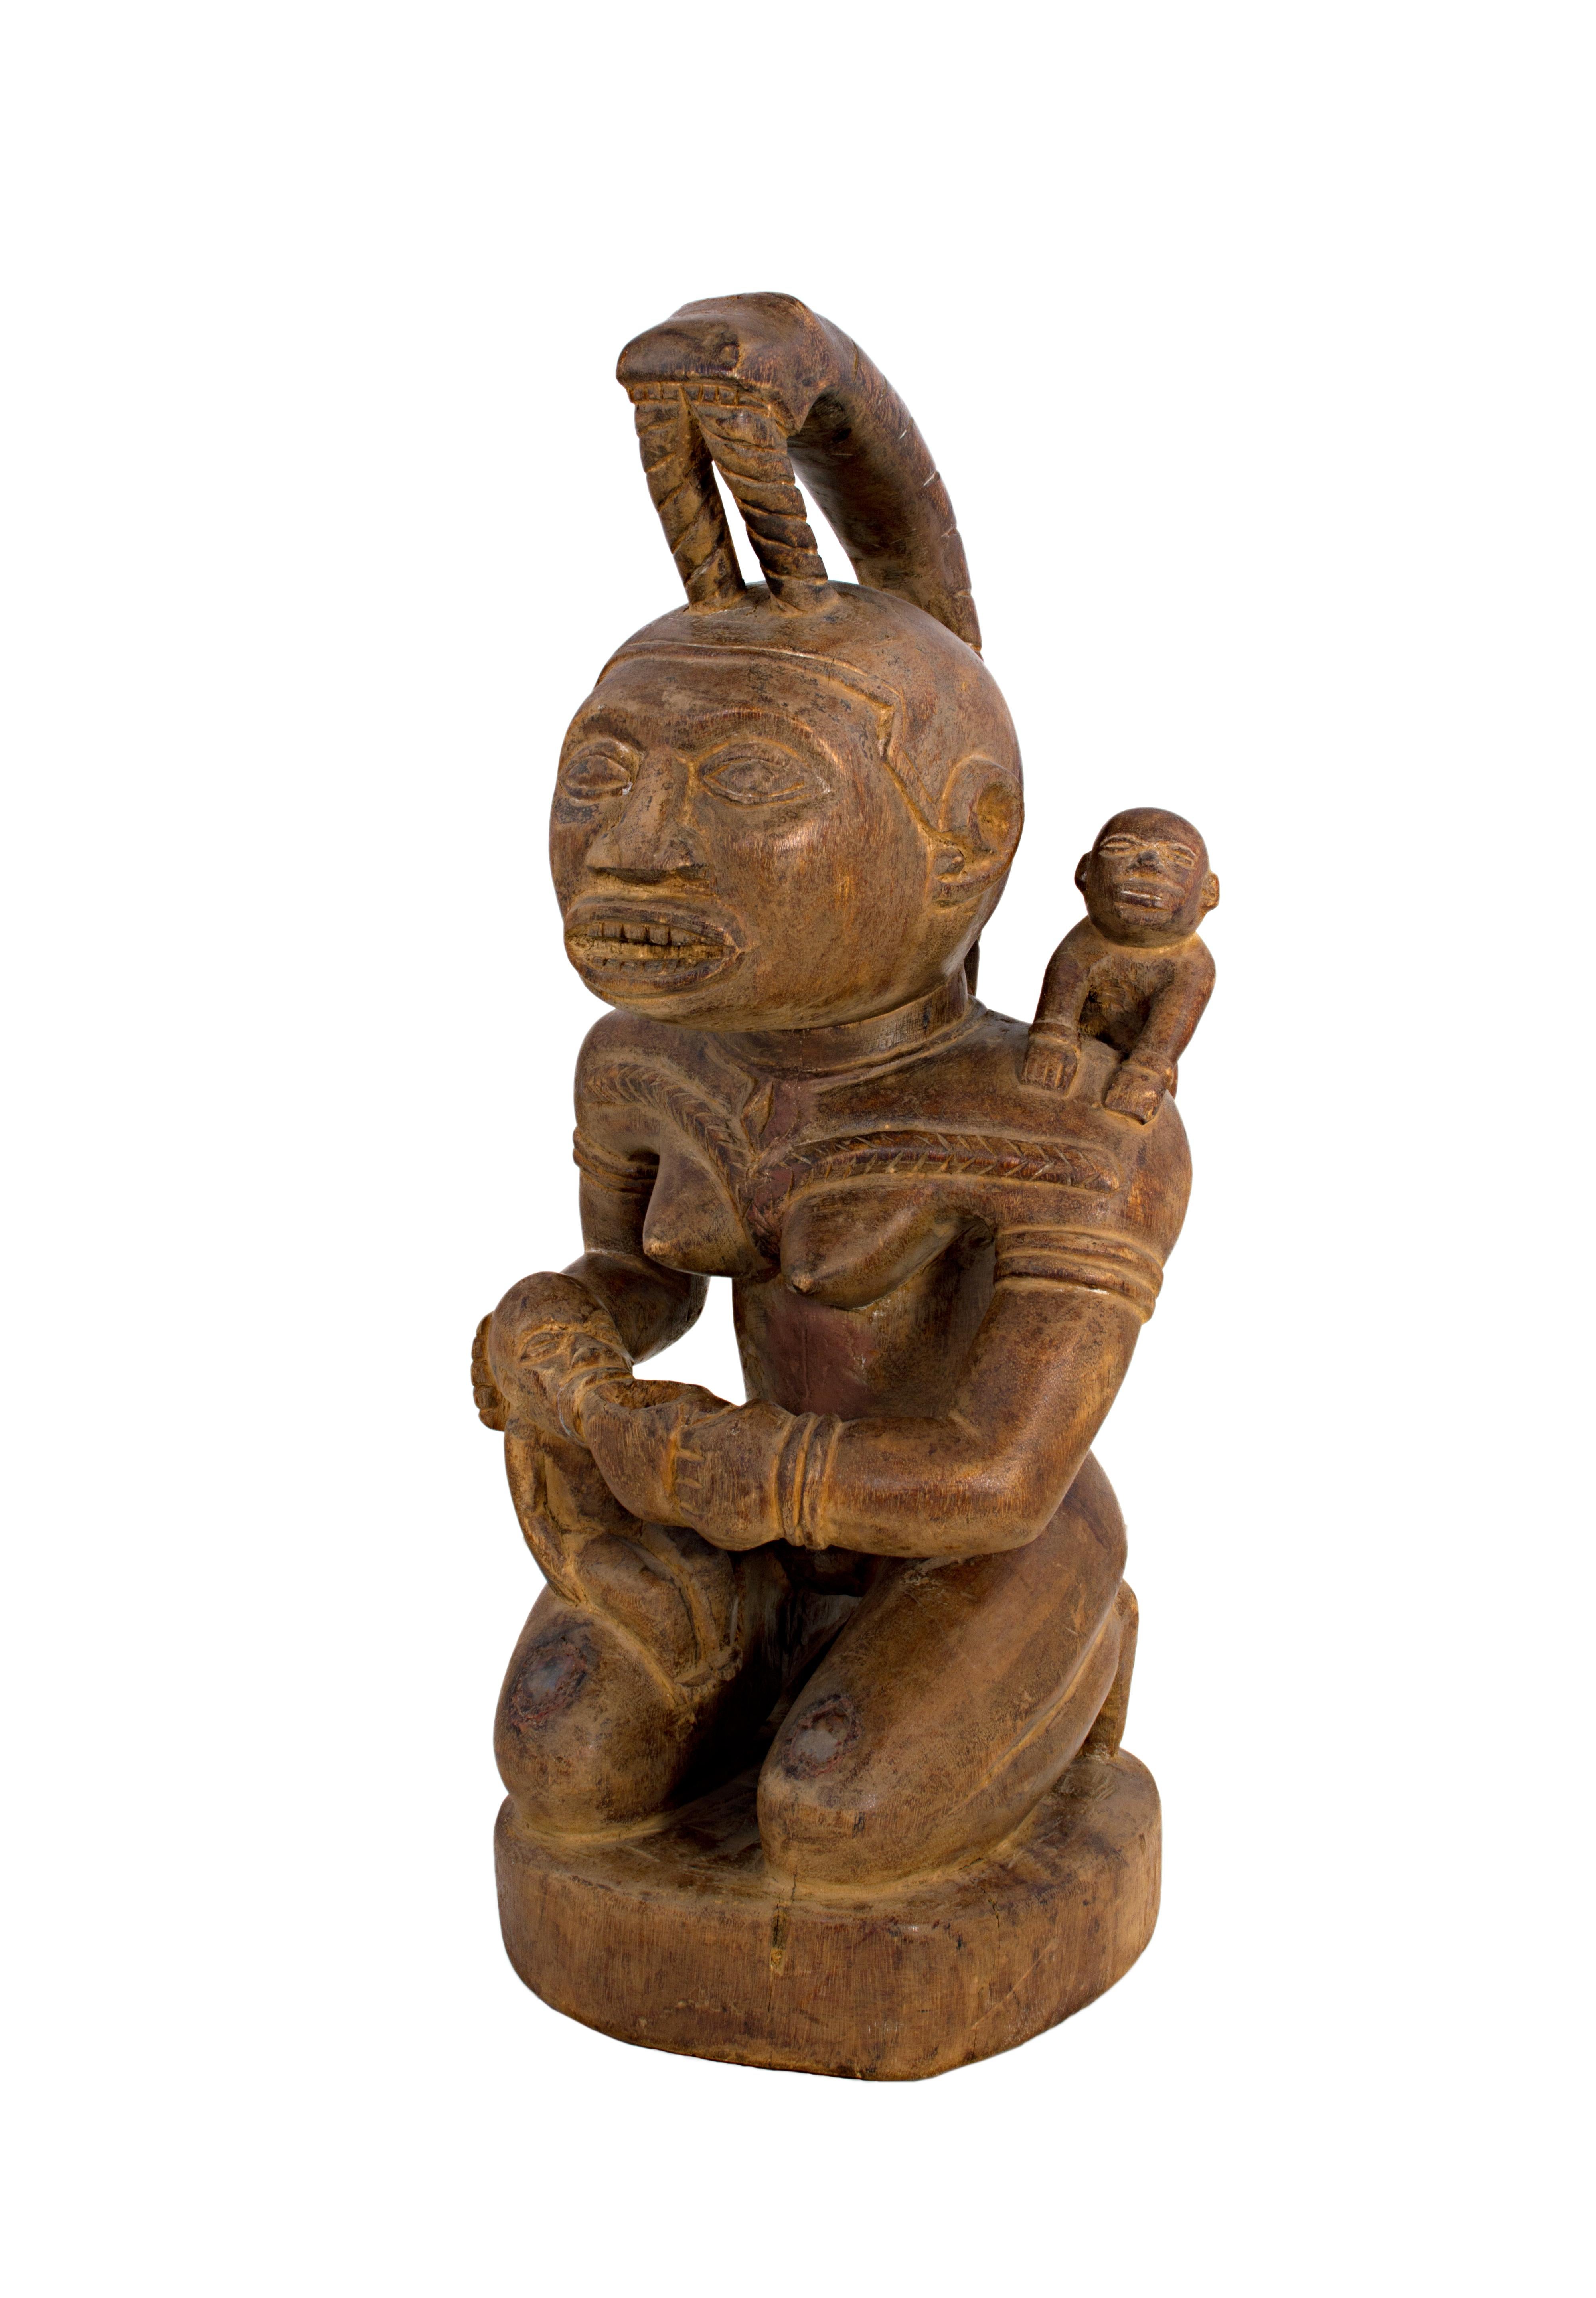 „Maternity-Bacongo, Zaire“, geschaffen in der Demokratischen Republik Kongo um 1940